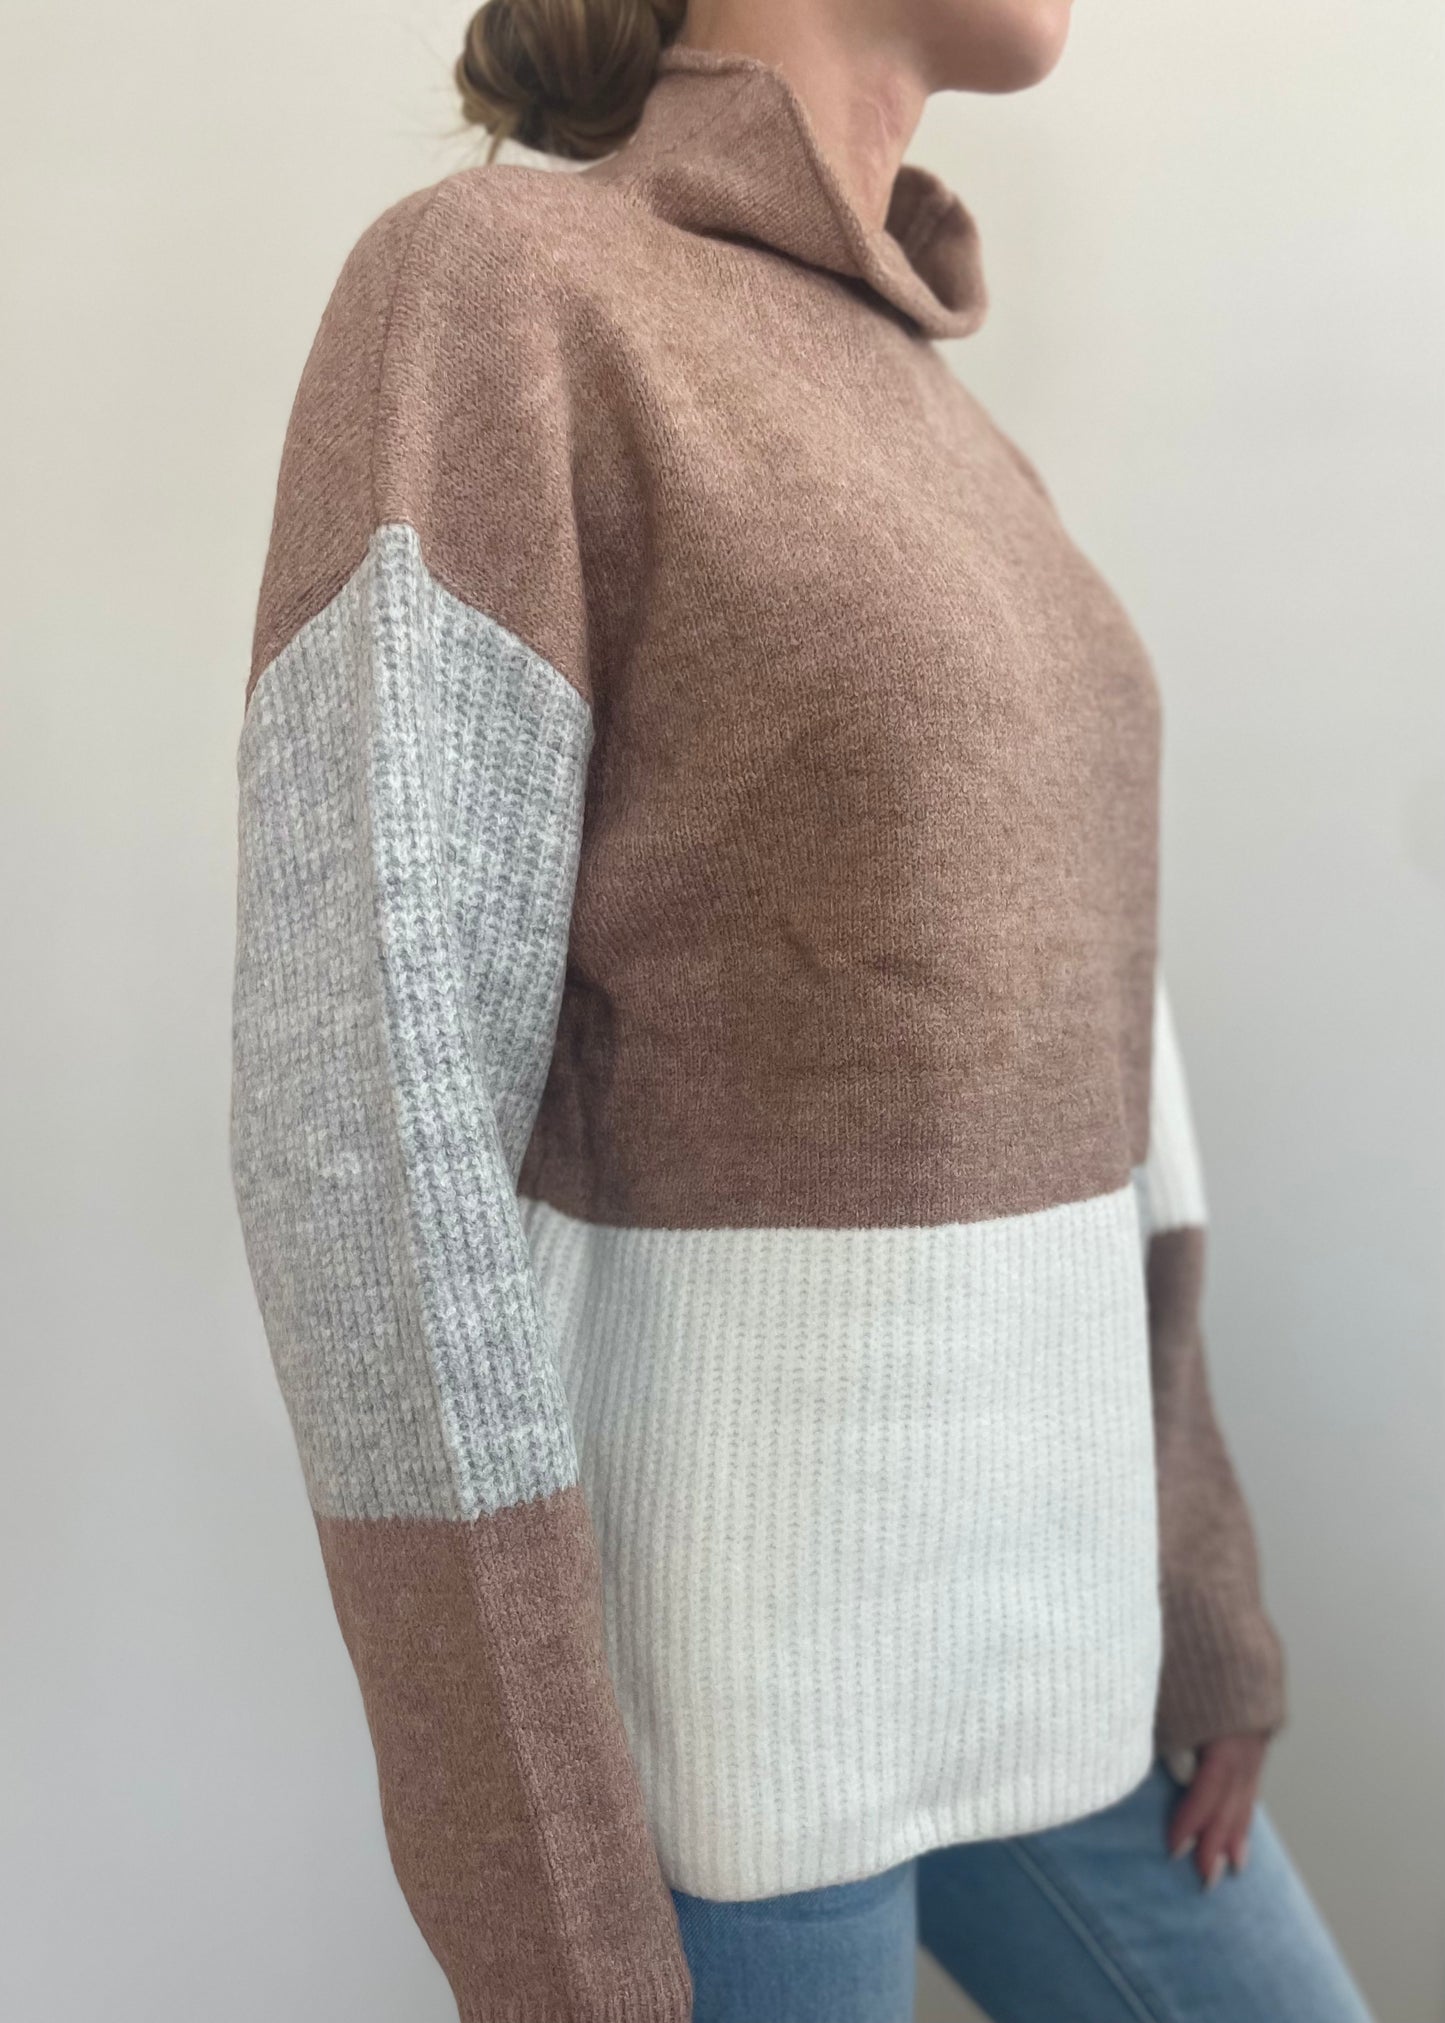 Cinnamon Spice Sweater